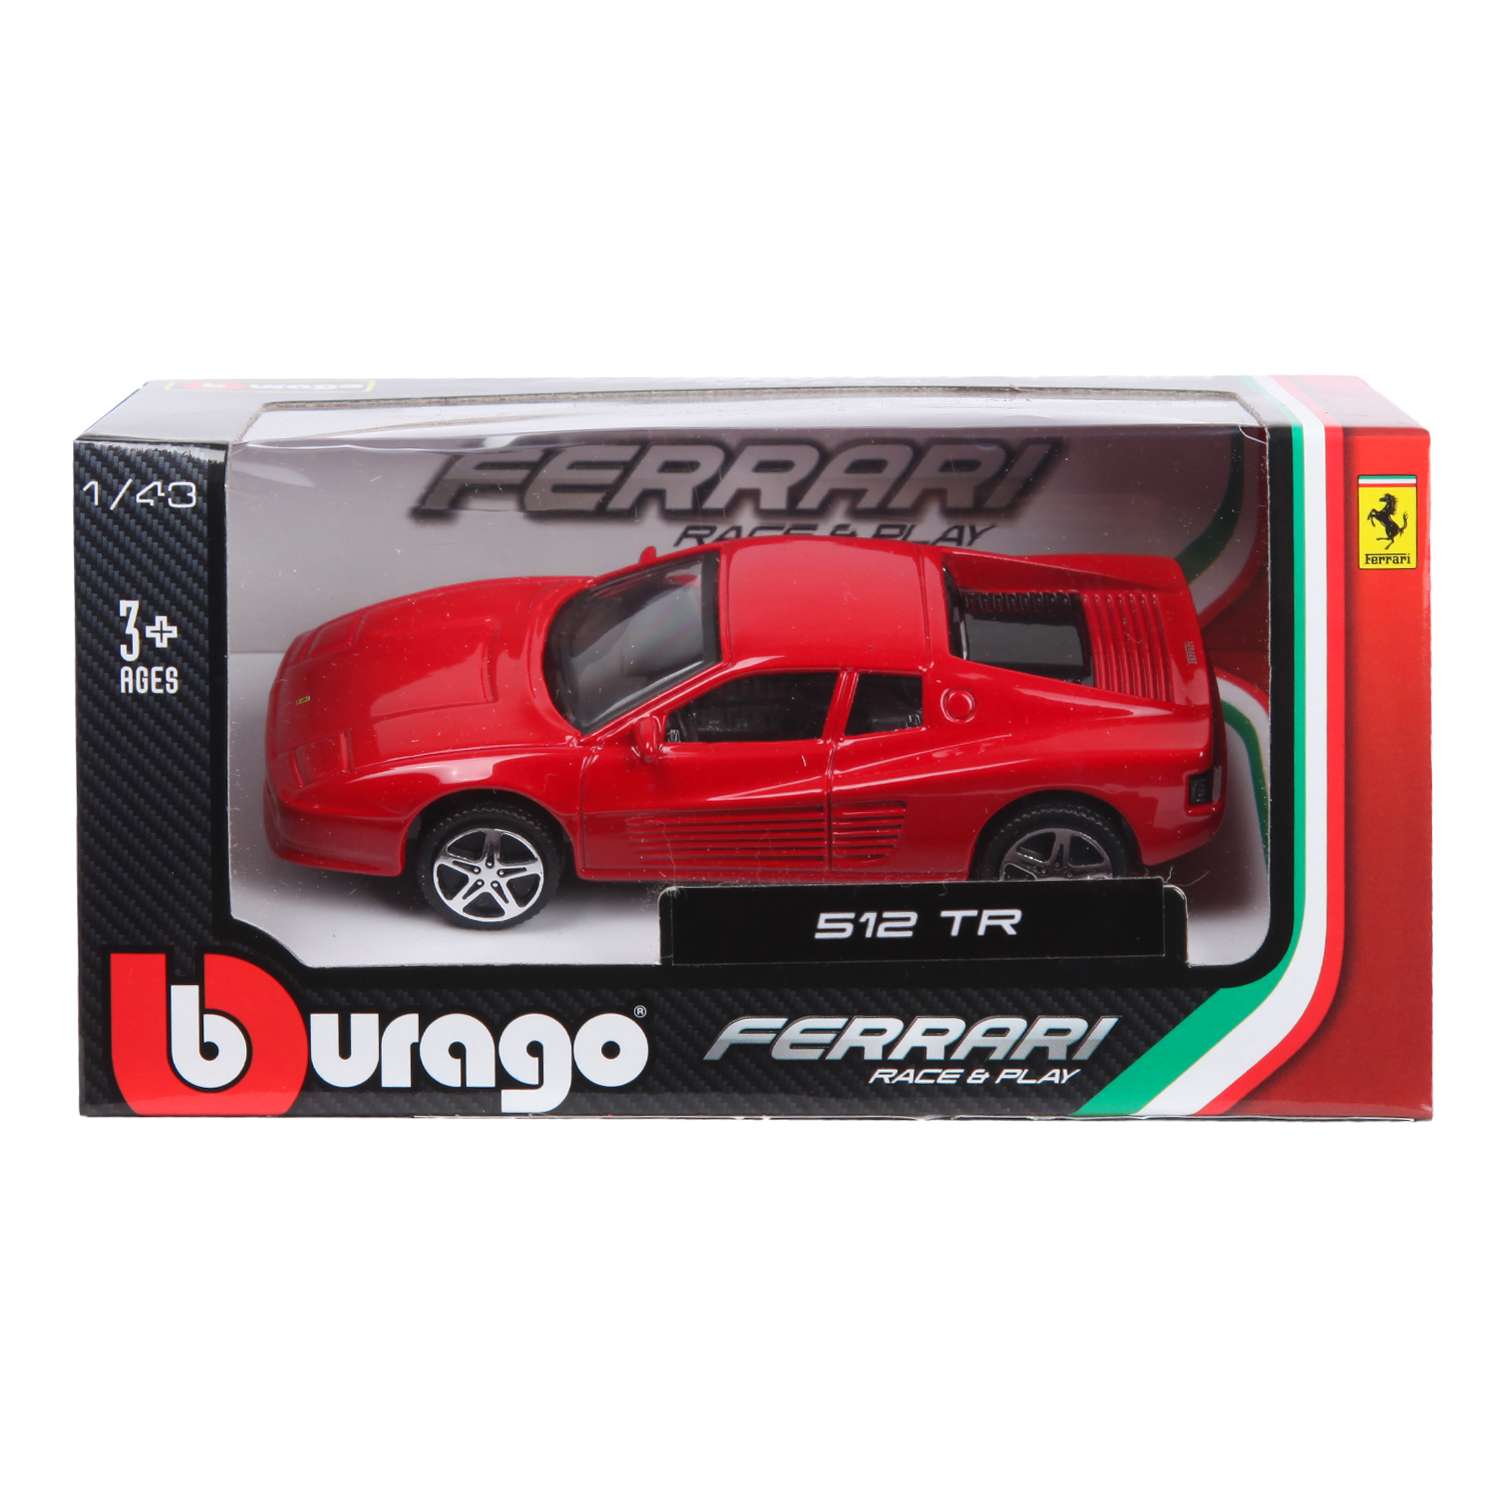 Машина BBurago 1:43 Ferrari 512tr 18-31097W 18-31097W - фото 2